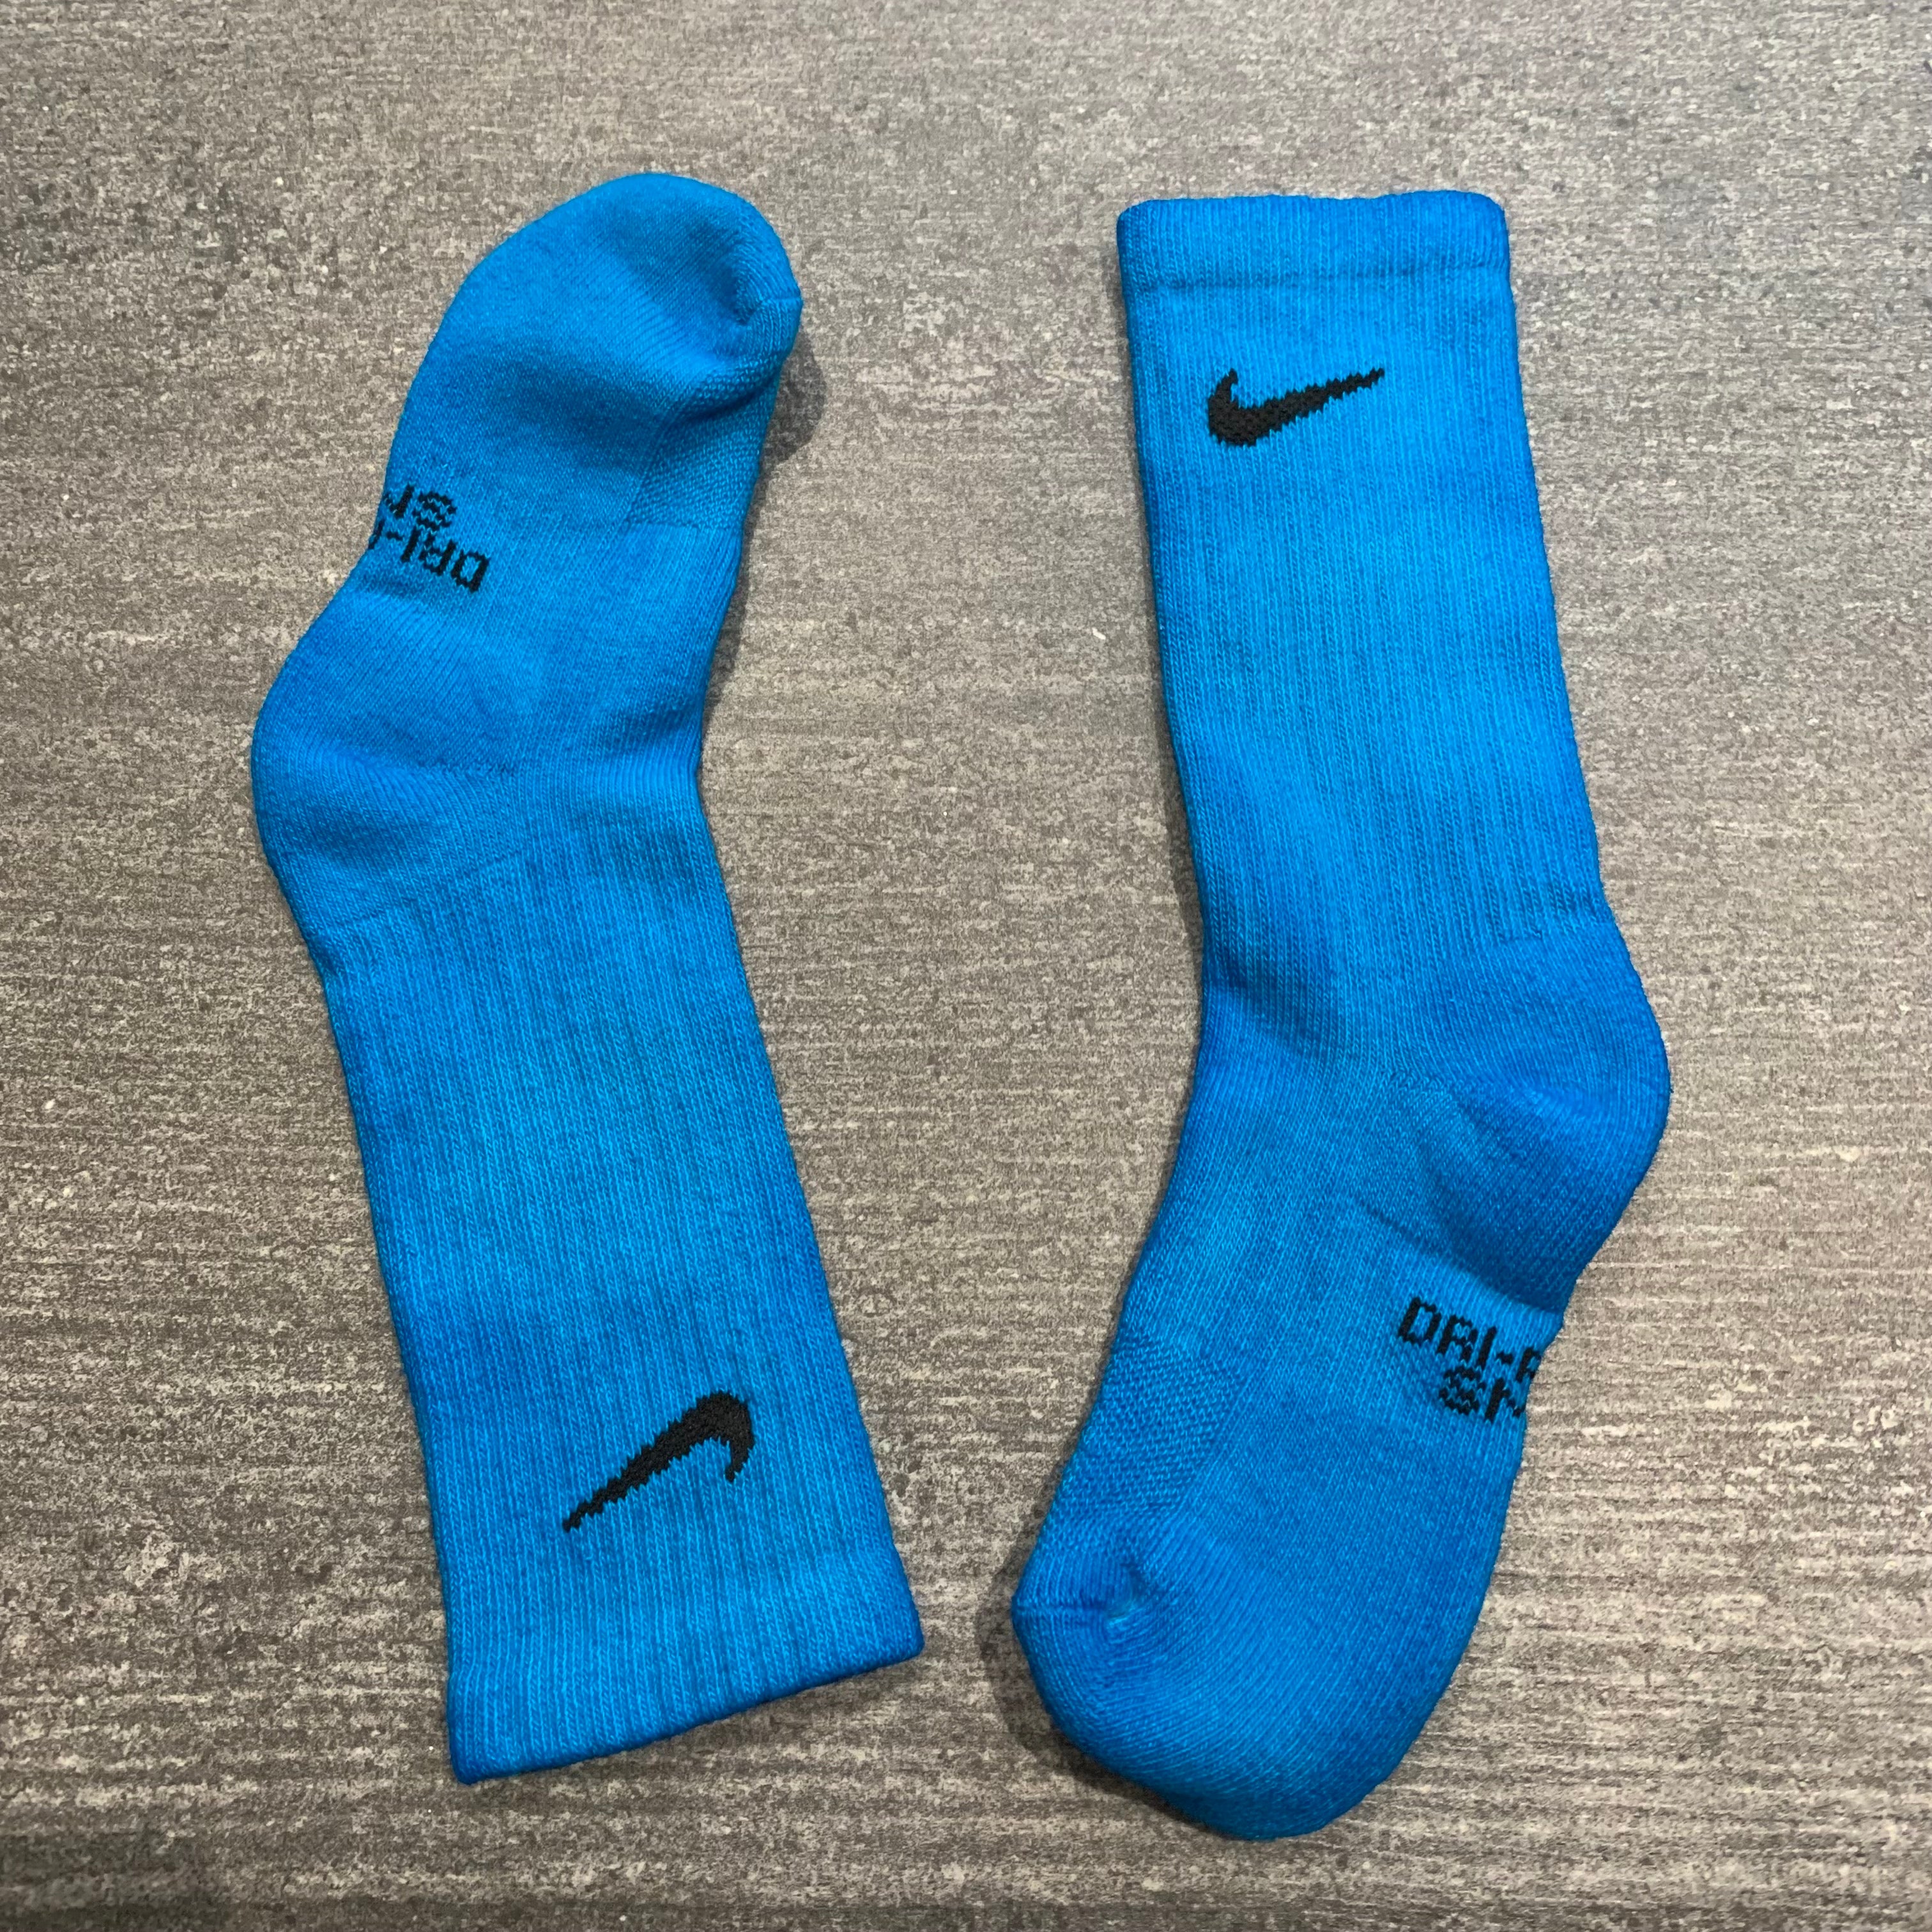 Nike ‘Block Blue’ Socks